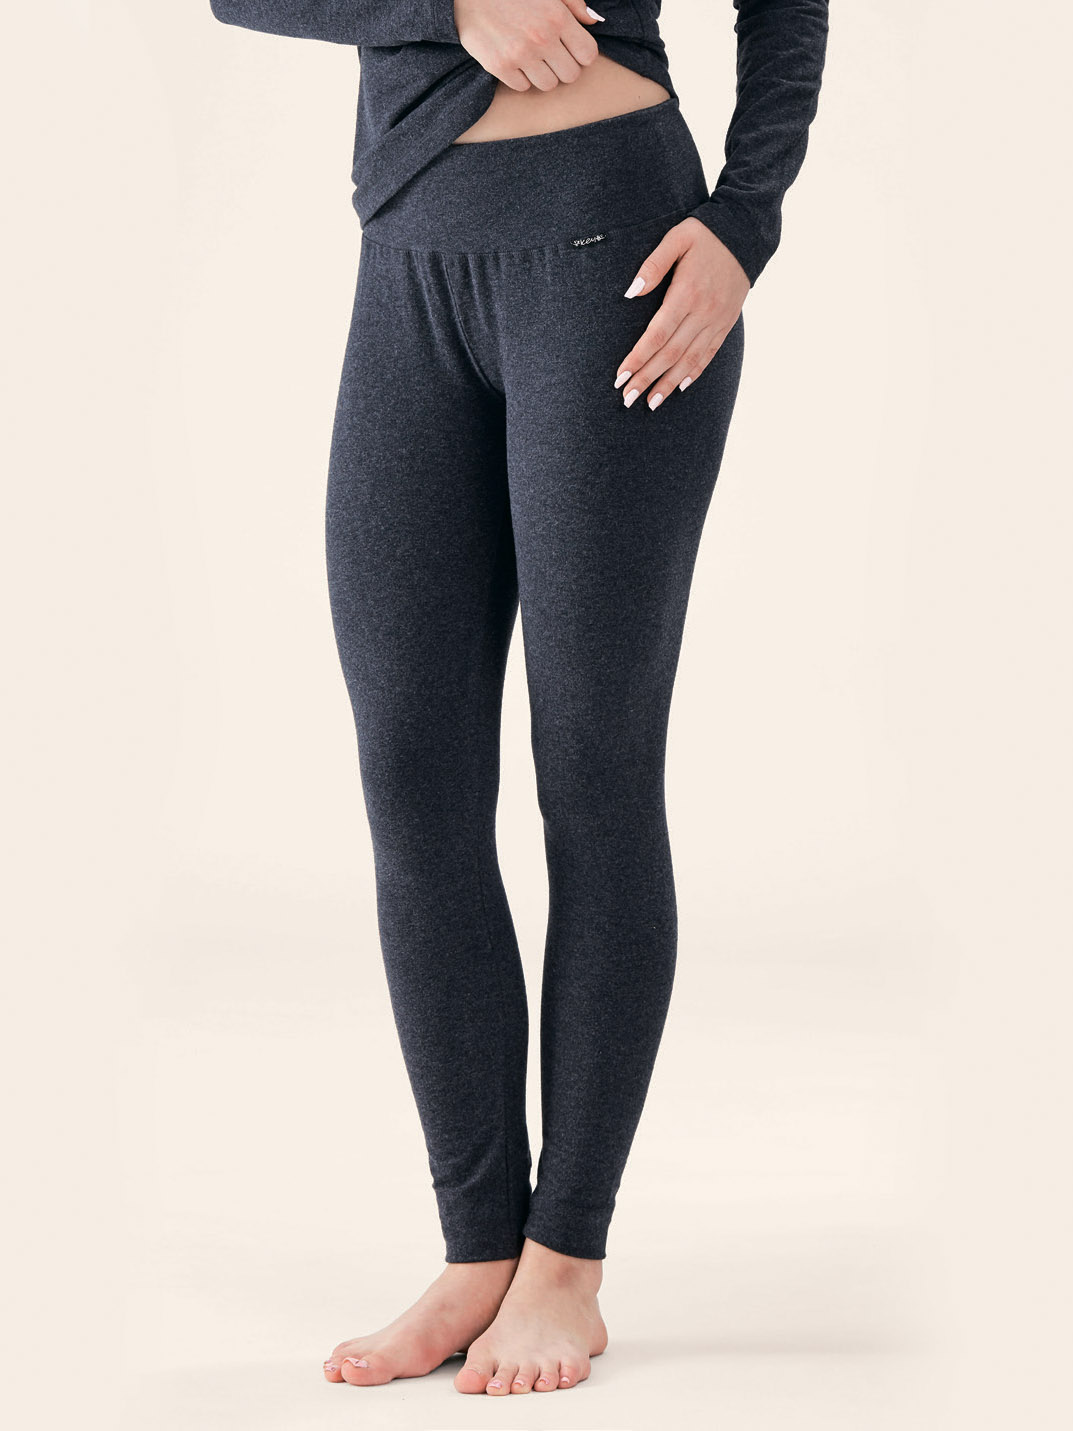 Women's cotton thermal leggings Key Hot TouchLXL 729 2 #2